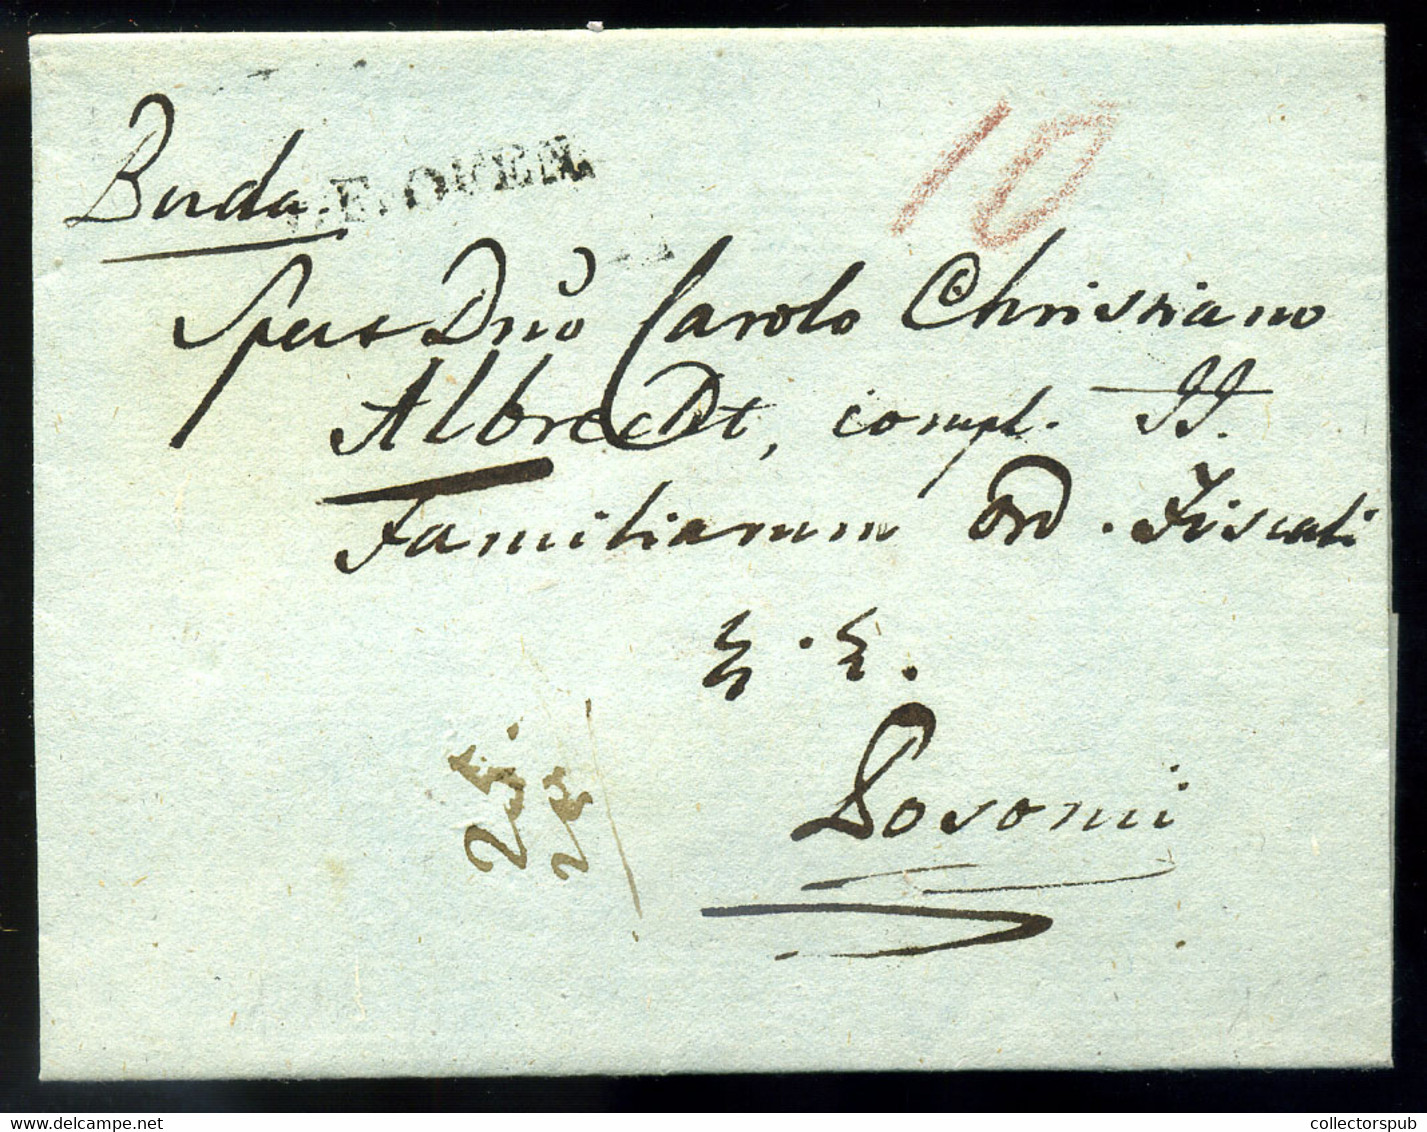 BUDA 1818. Szép Portós Levél, "F.OFEN" Pozsonyba Küldve  /  Nice Unpaid Letter To Pozsony - ...-1867 Prefilatelia